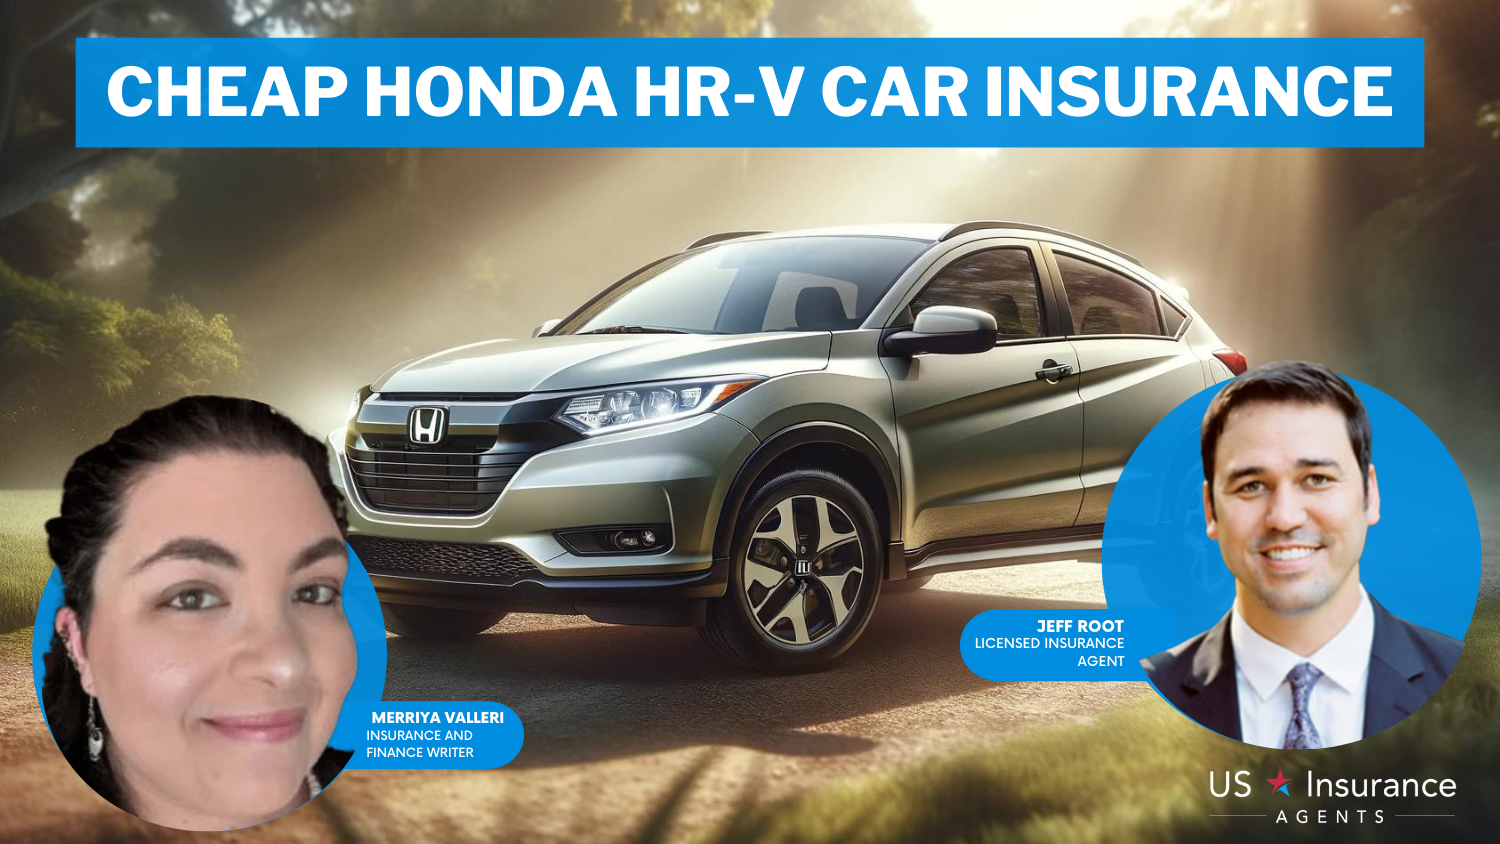 Progressive, USAA and State Farm: Cheap Honda HR-V Car Insurance